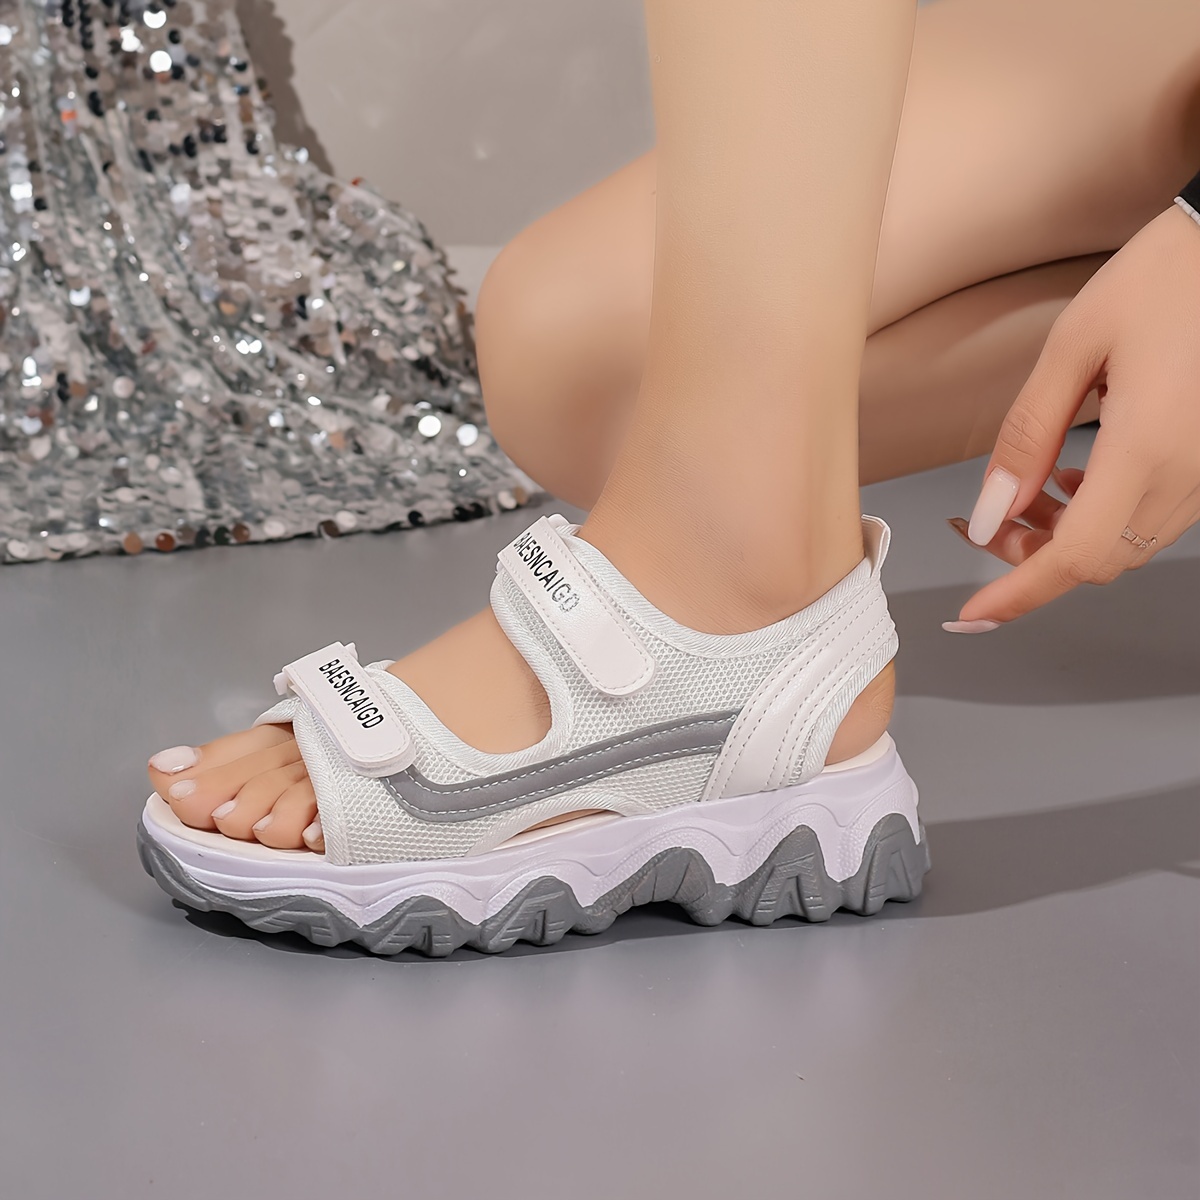 Women's Platform Sports Sandals, Casual Open Toe Cut-out Slip On Shoes,  Comfort Outdoor Sandals